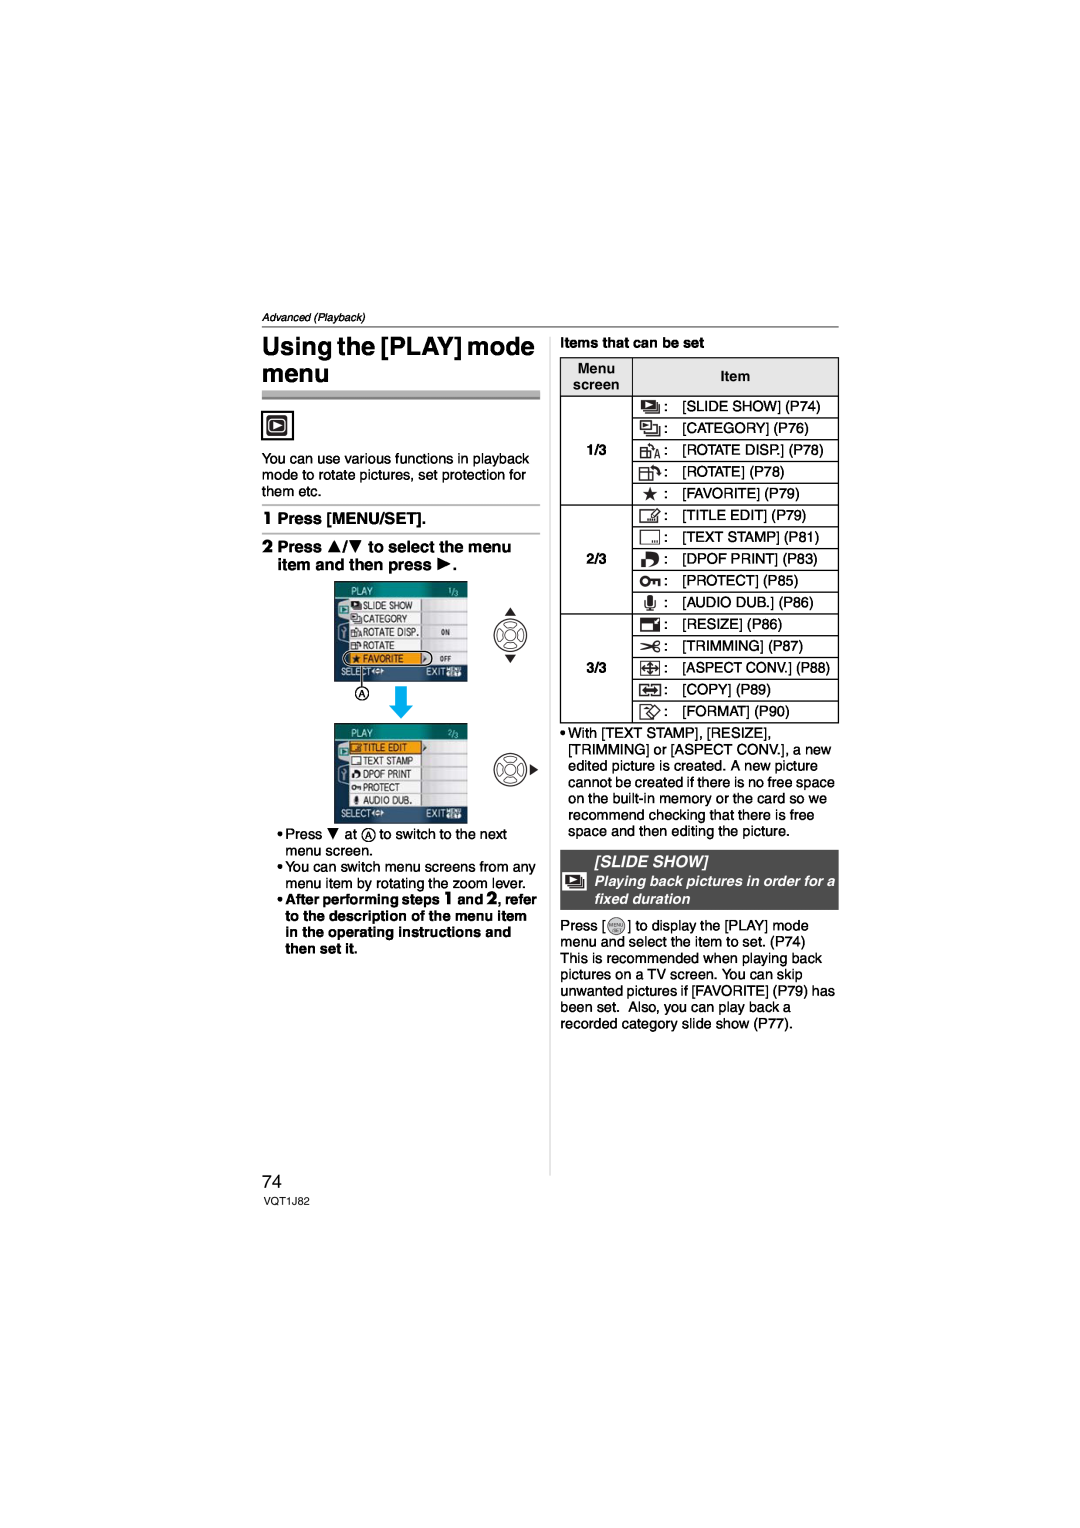 Panasonic DMC-FX33 Using the PLAY mode menu, Press MENU/SET 2 Press 3/4 to select the menu item and then press, Slide Show 